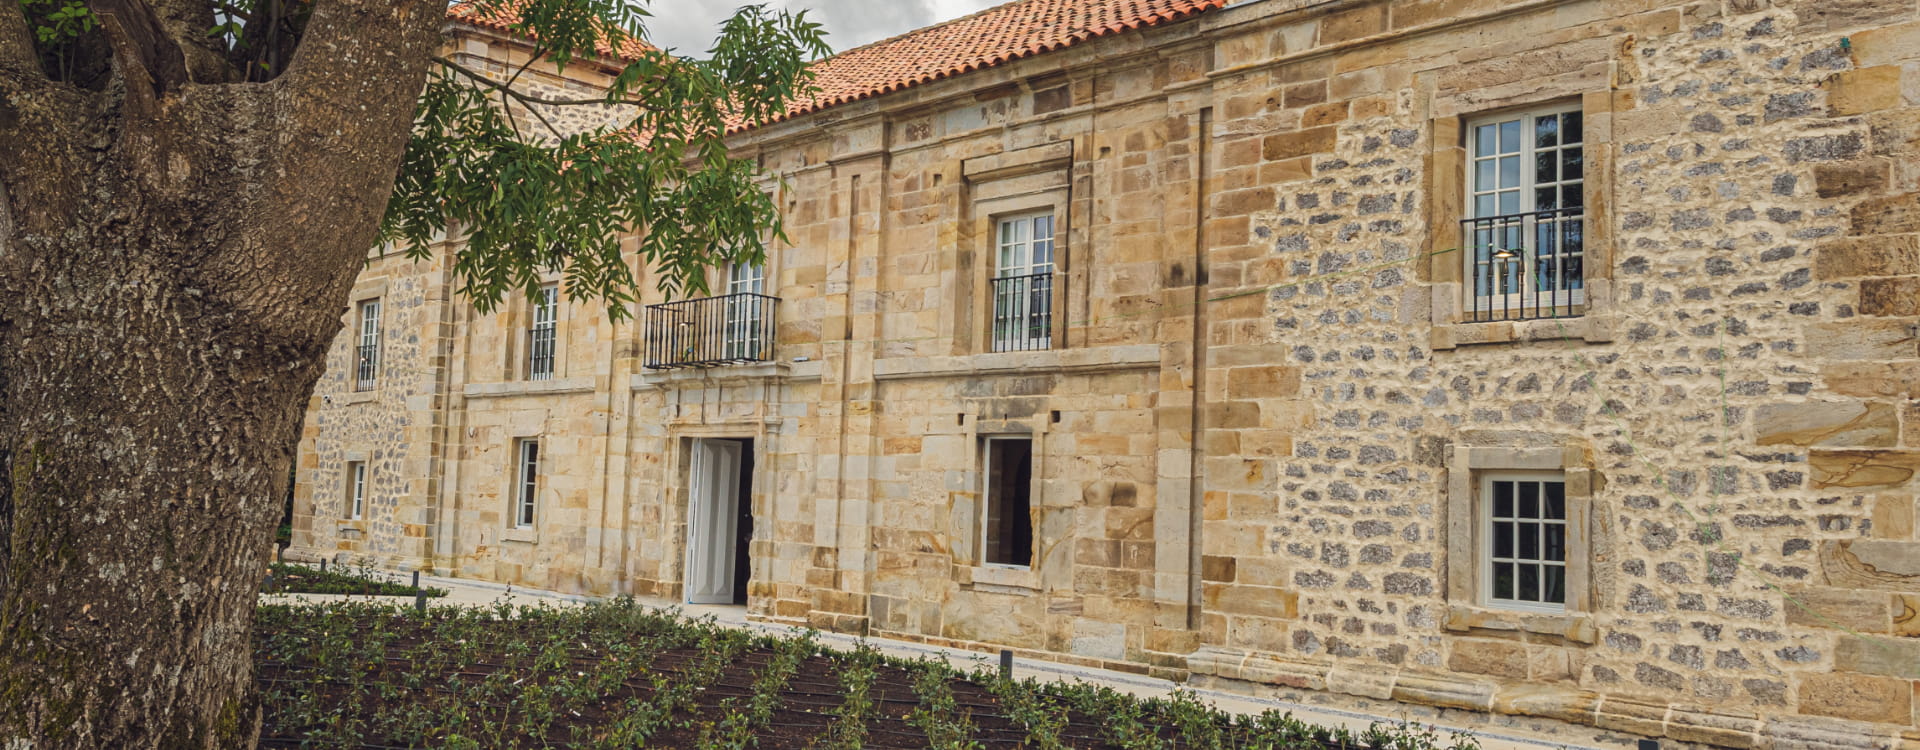 Image of the exterior façade of the Palacio de los Acevedo